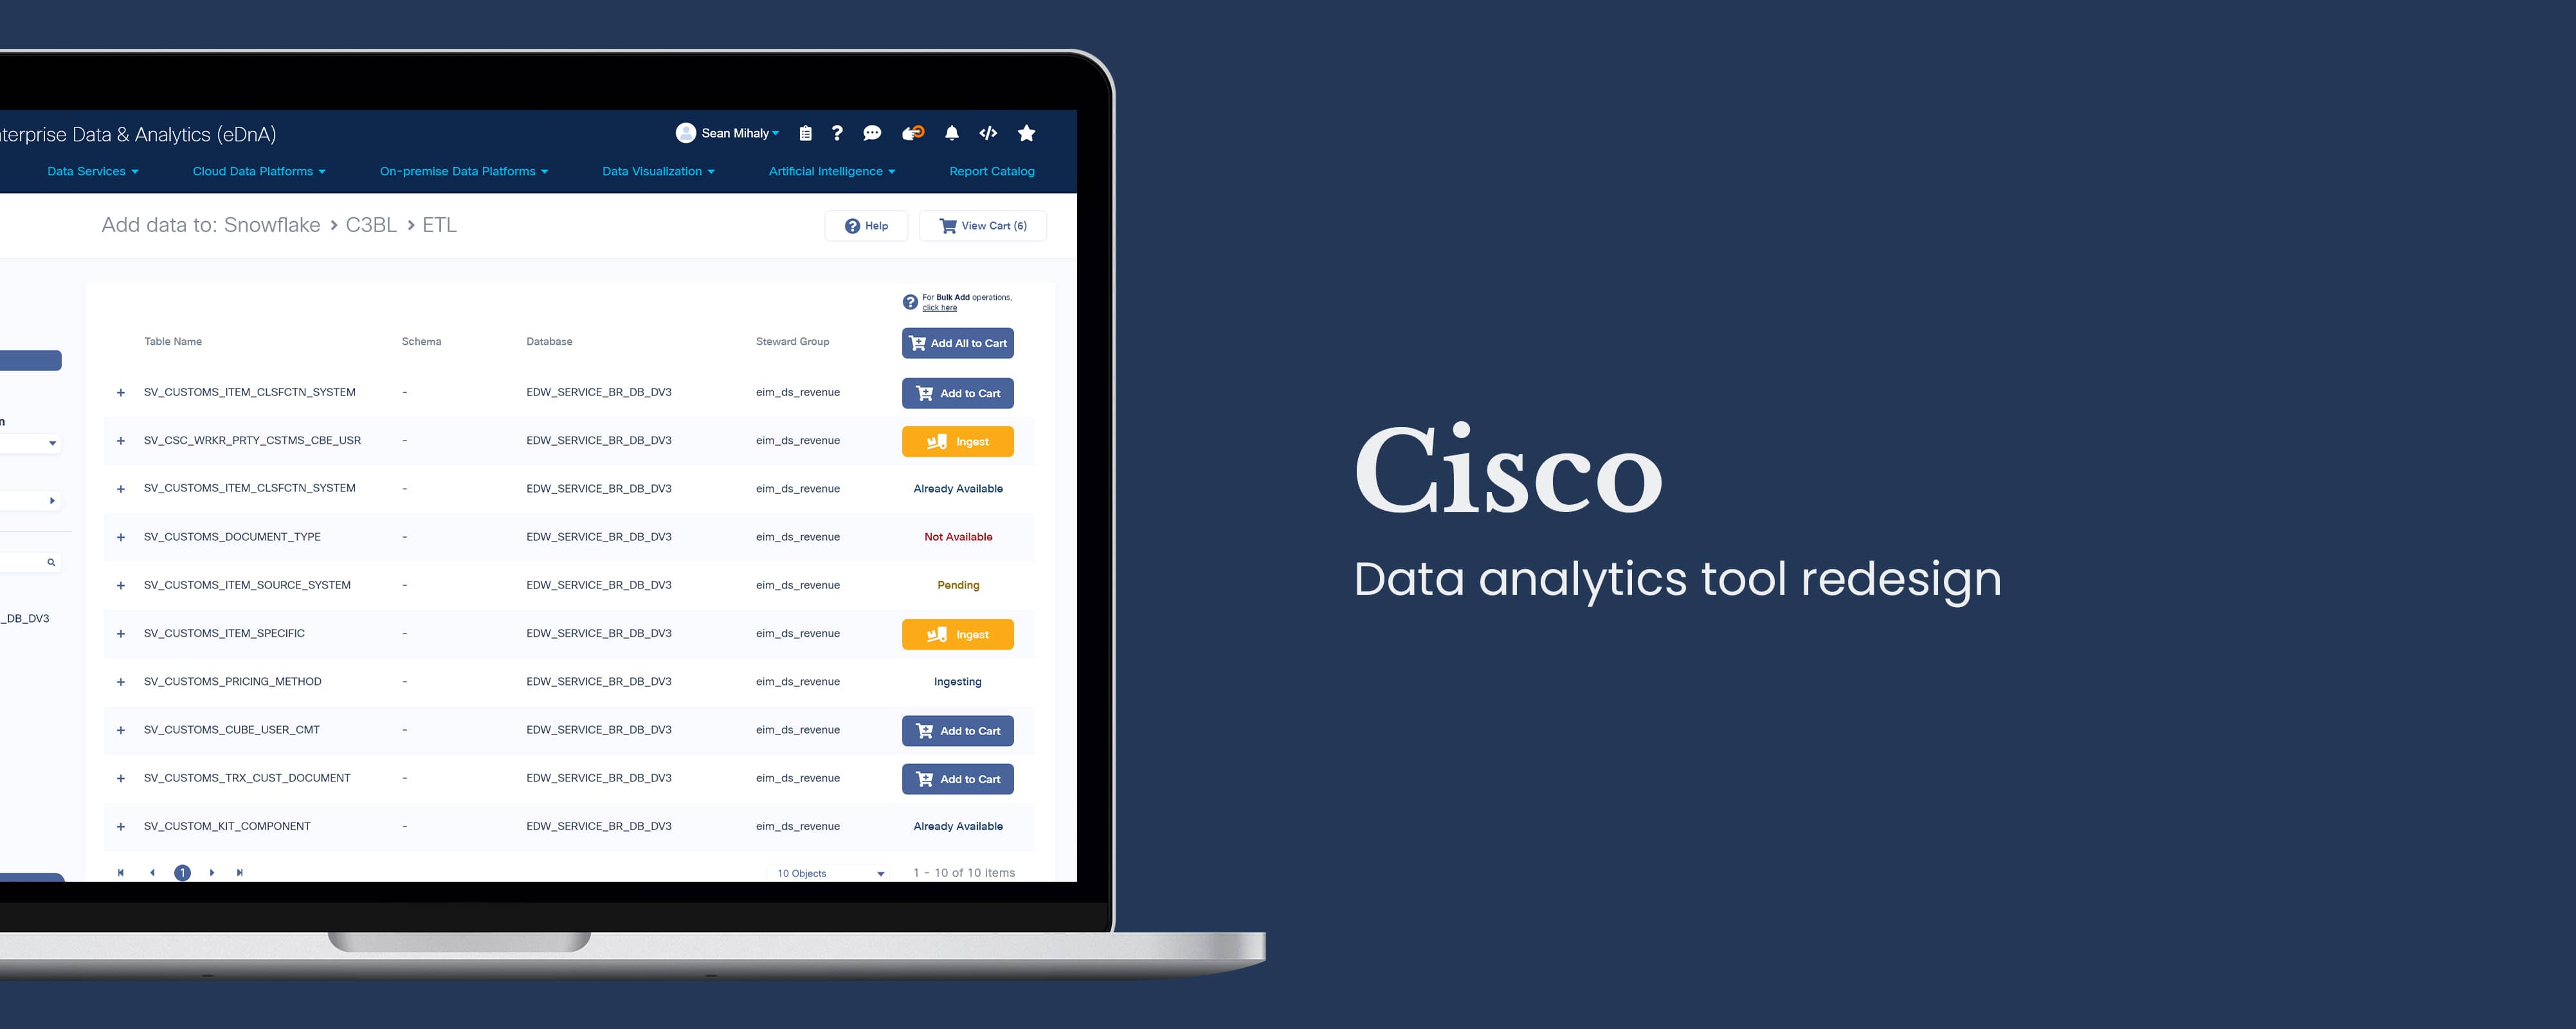 Cisco: Data analytics tool redesign